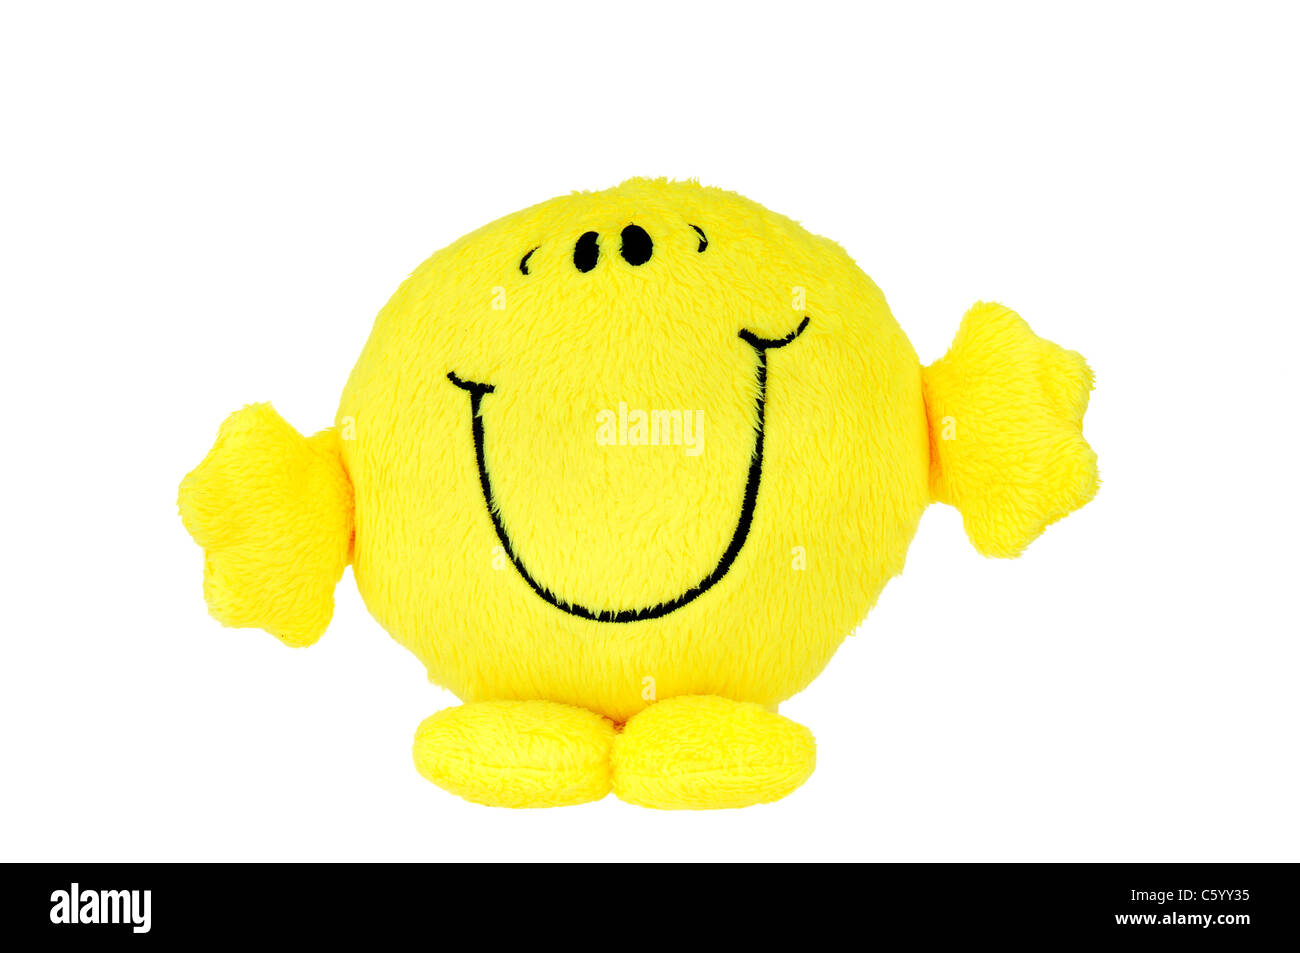 Happy yellow smile face isolated on white background. Stock Photo